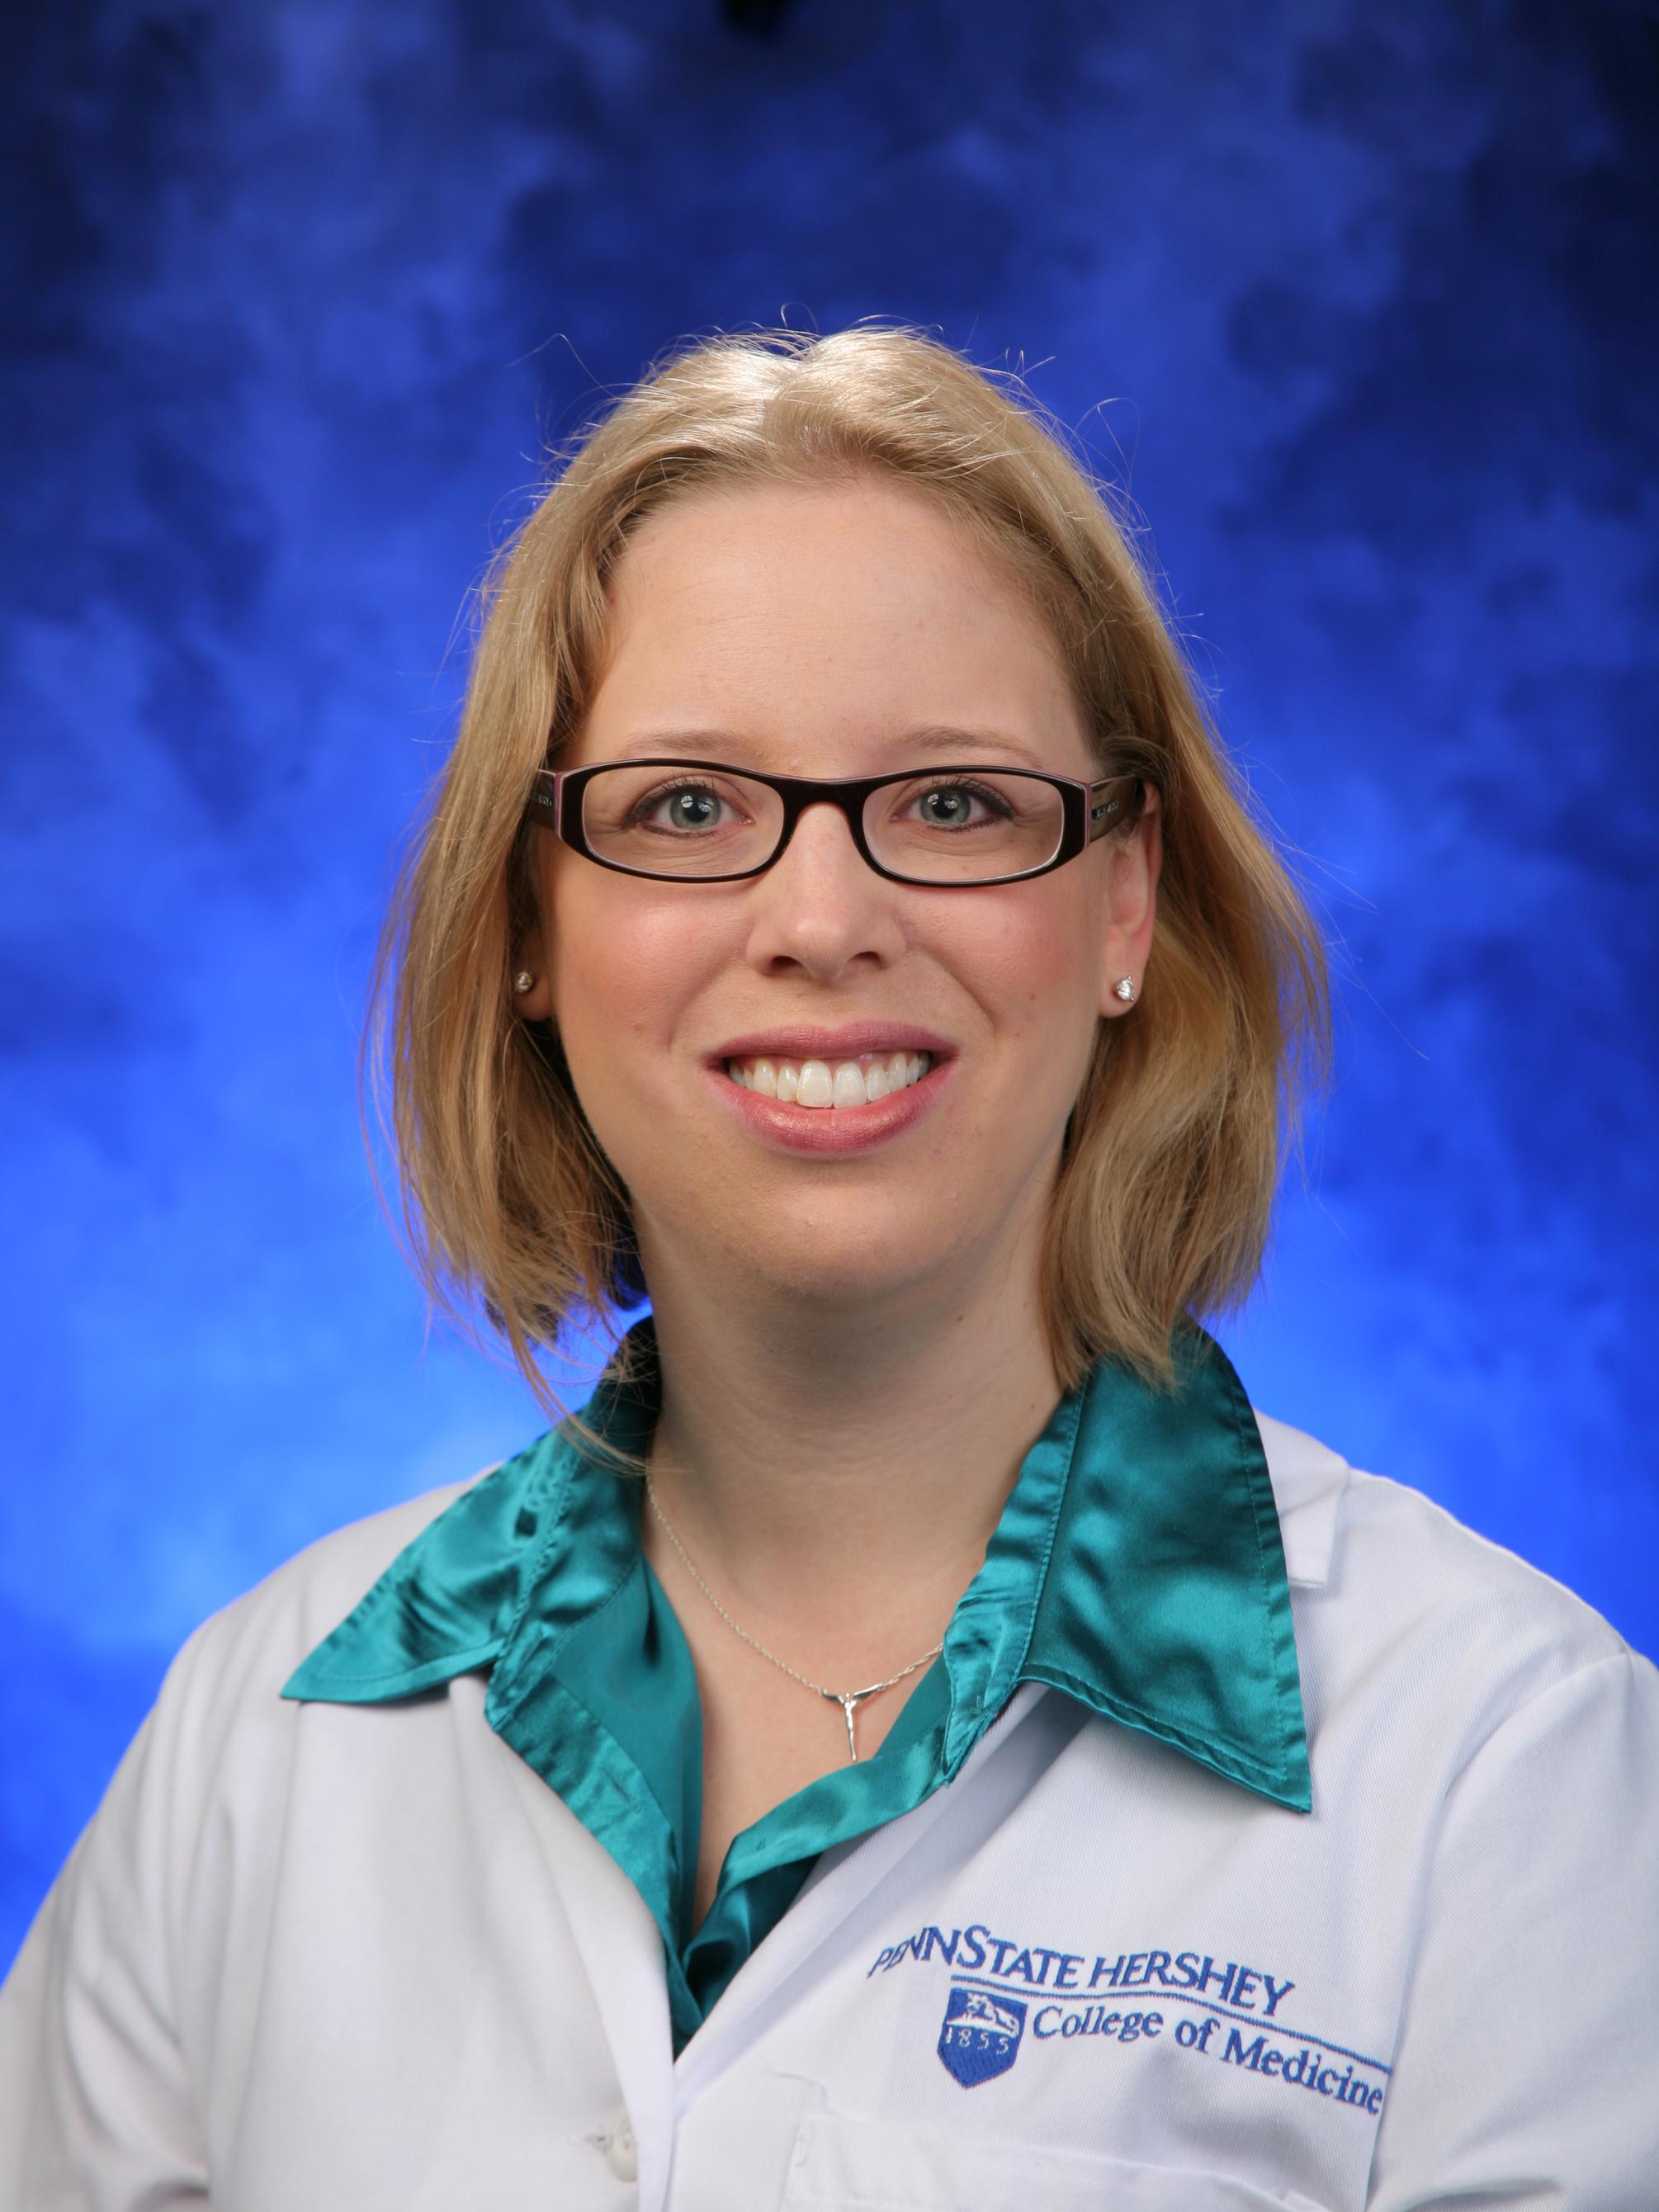 Jennifer Kraschnewski headshot with short blonde hair, glasses, green shirt and white Penn State College of Medicine lab coat